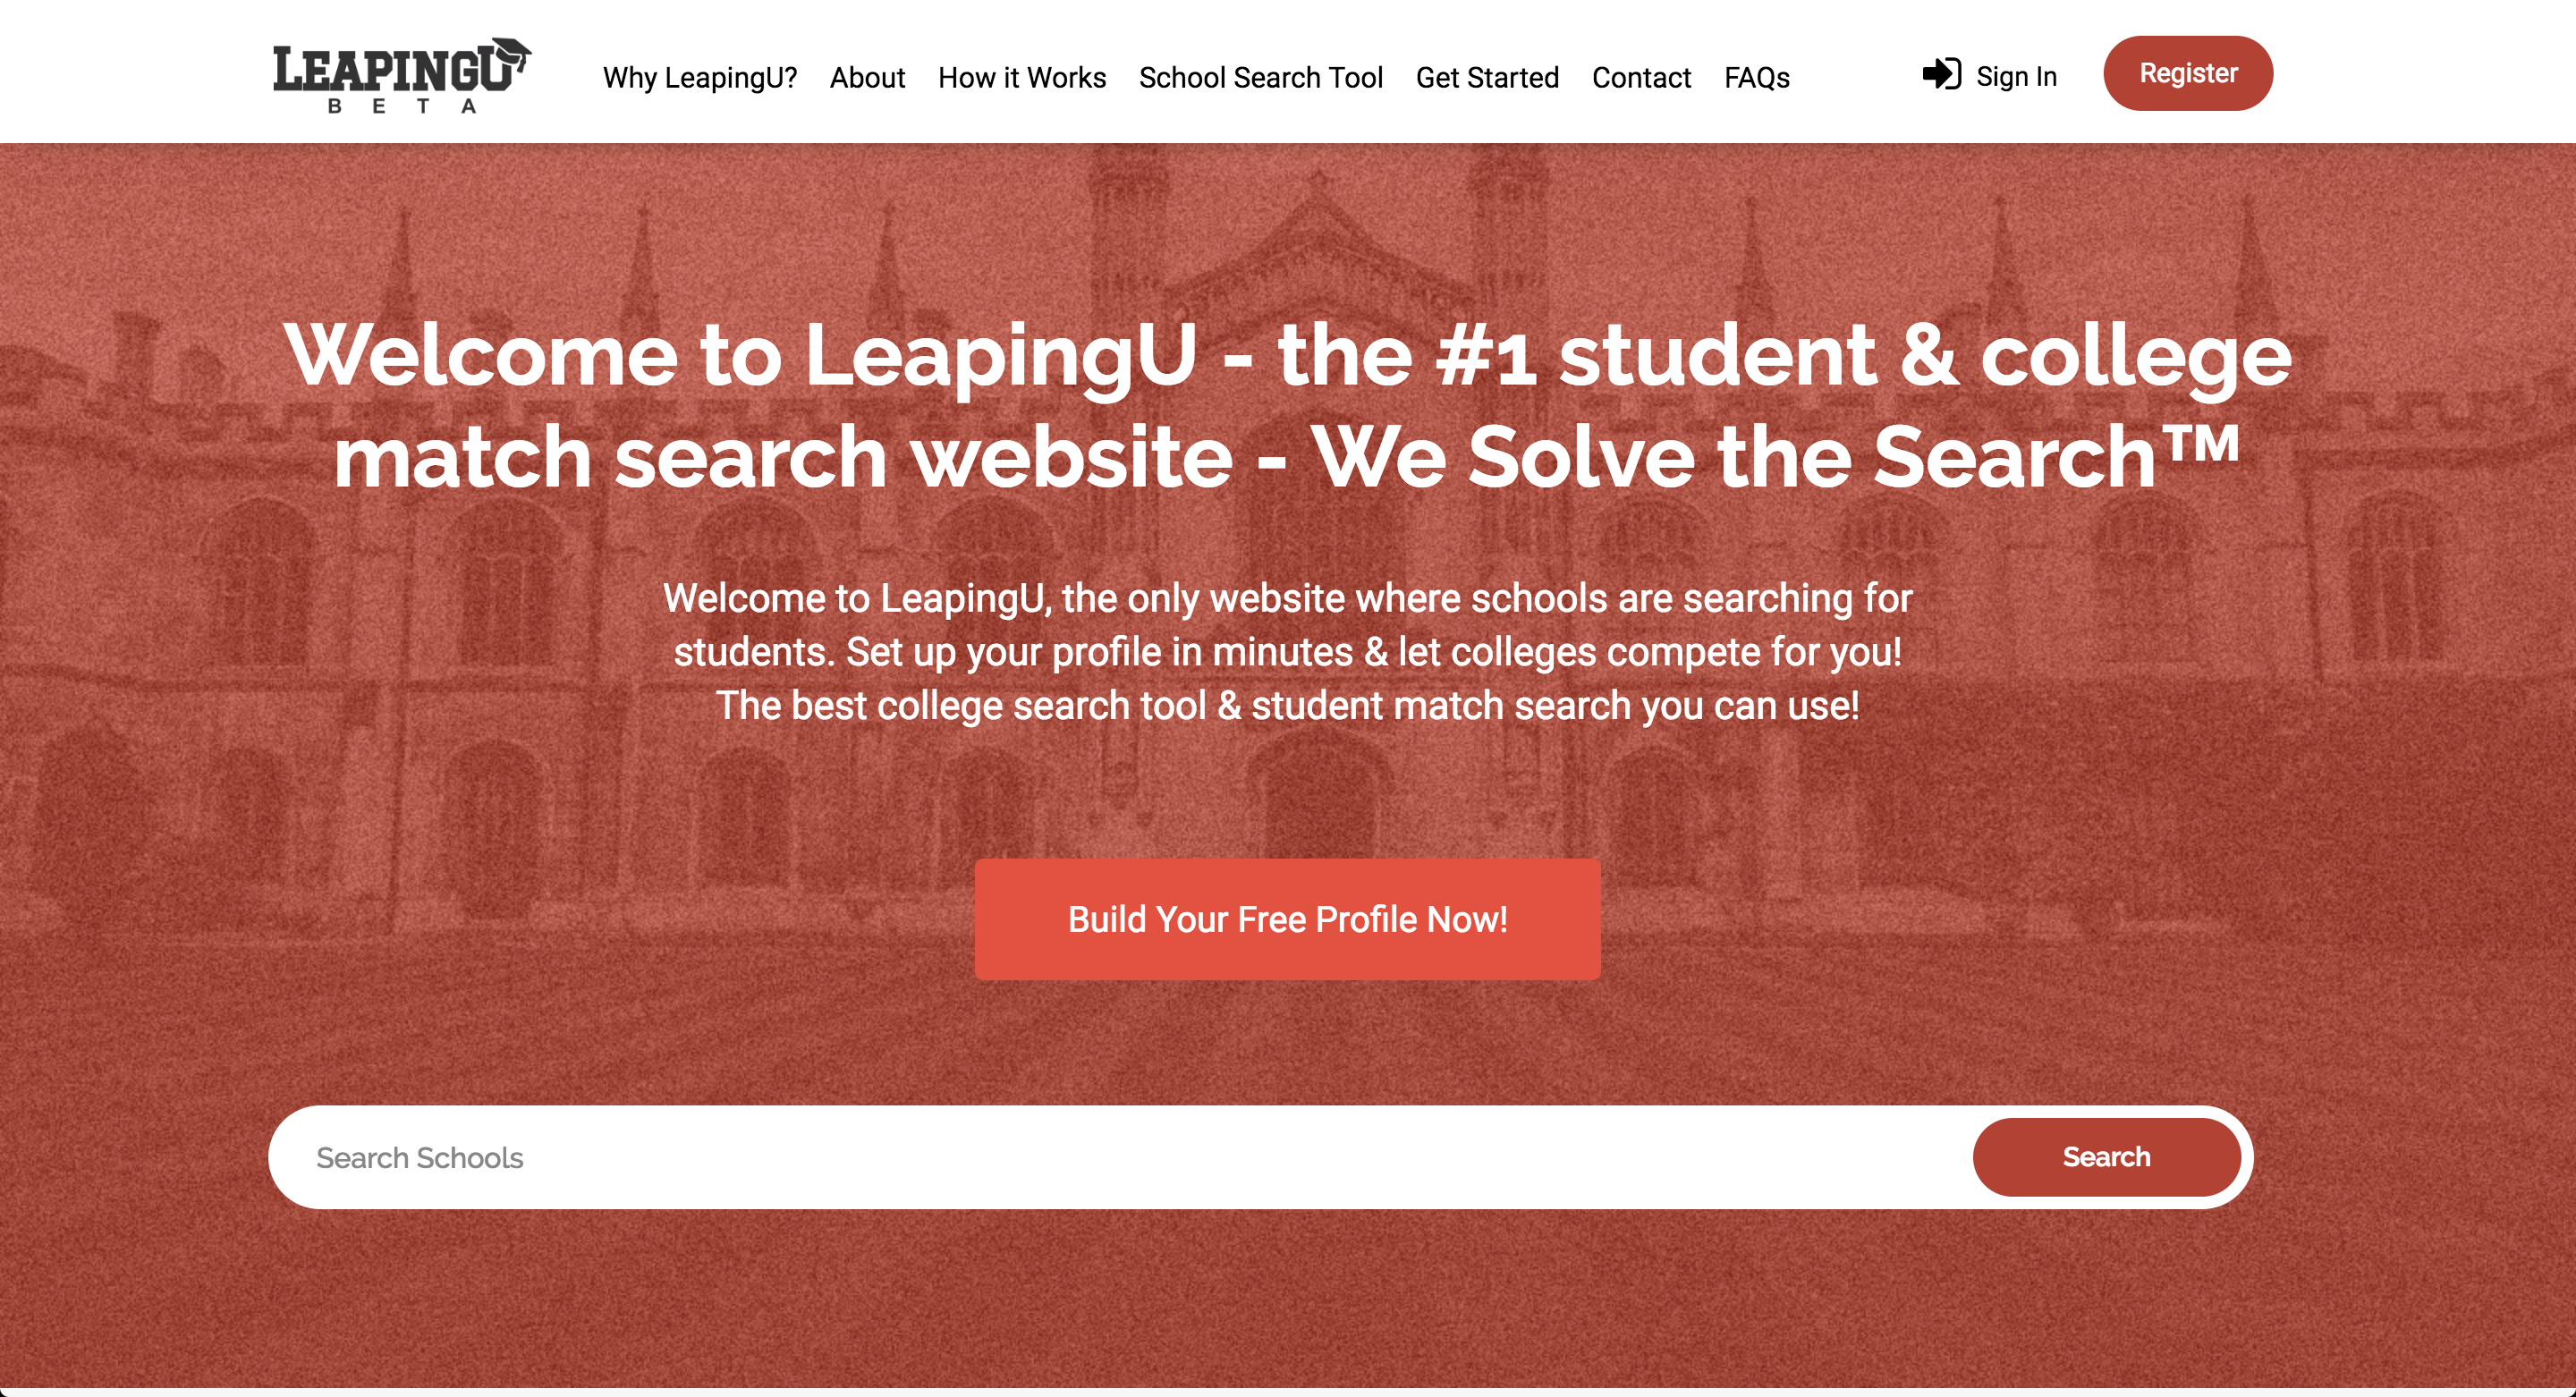 LeapingU Web Application Redesign Screenshot